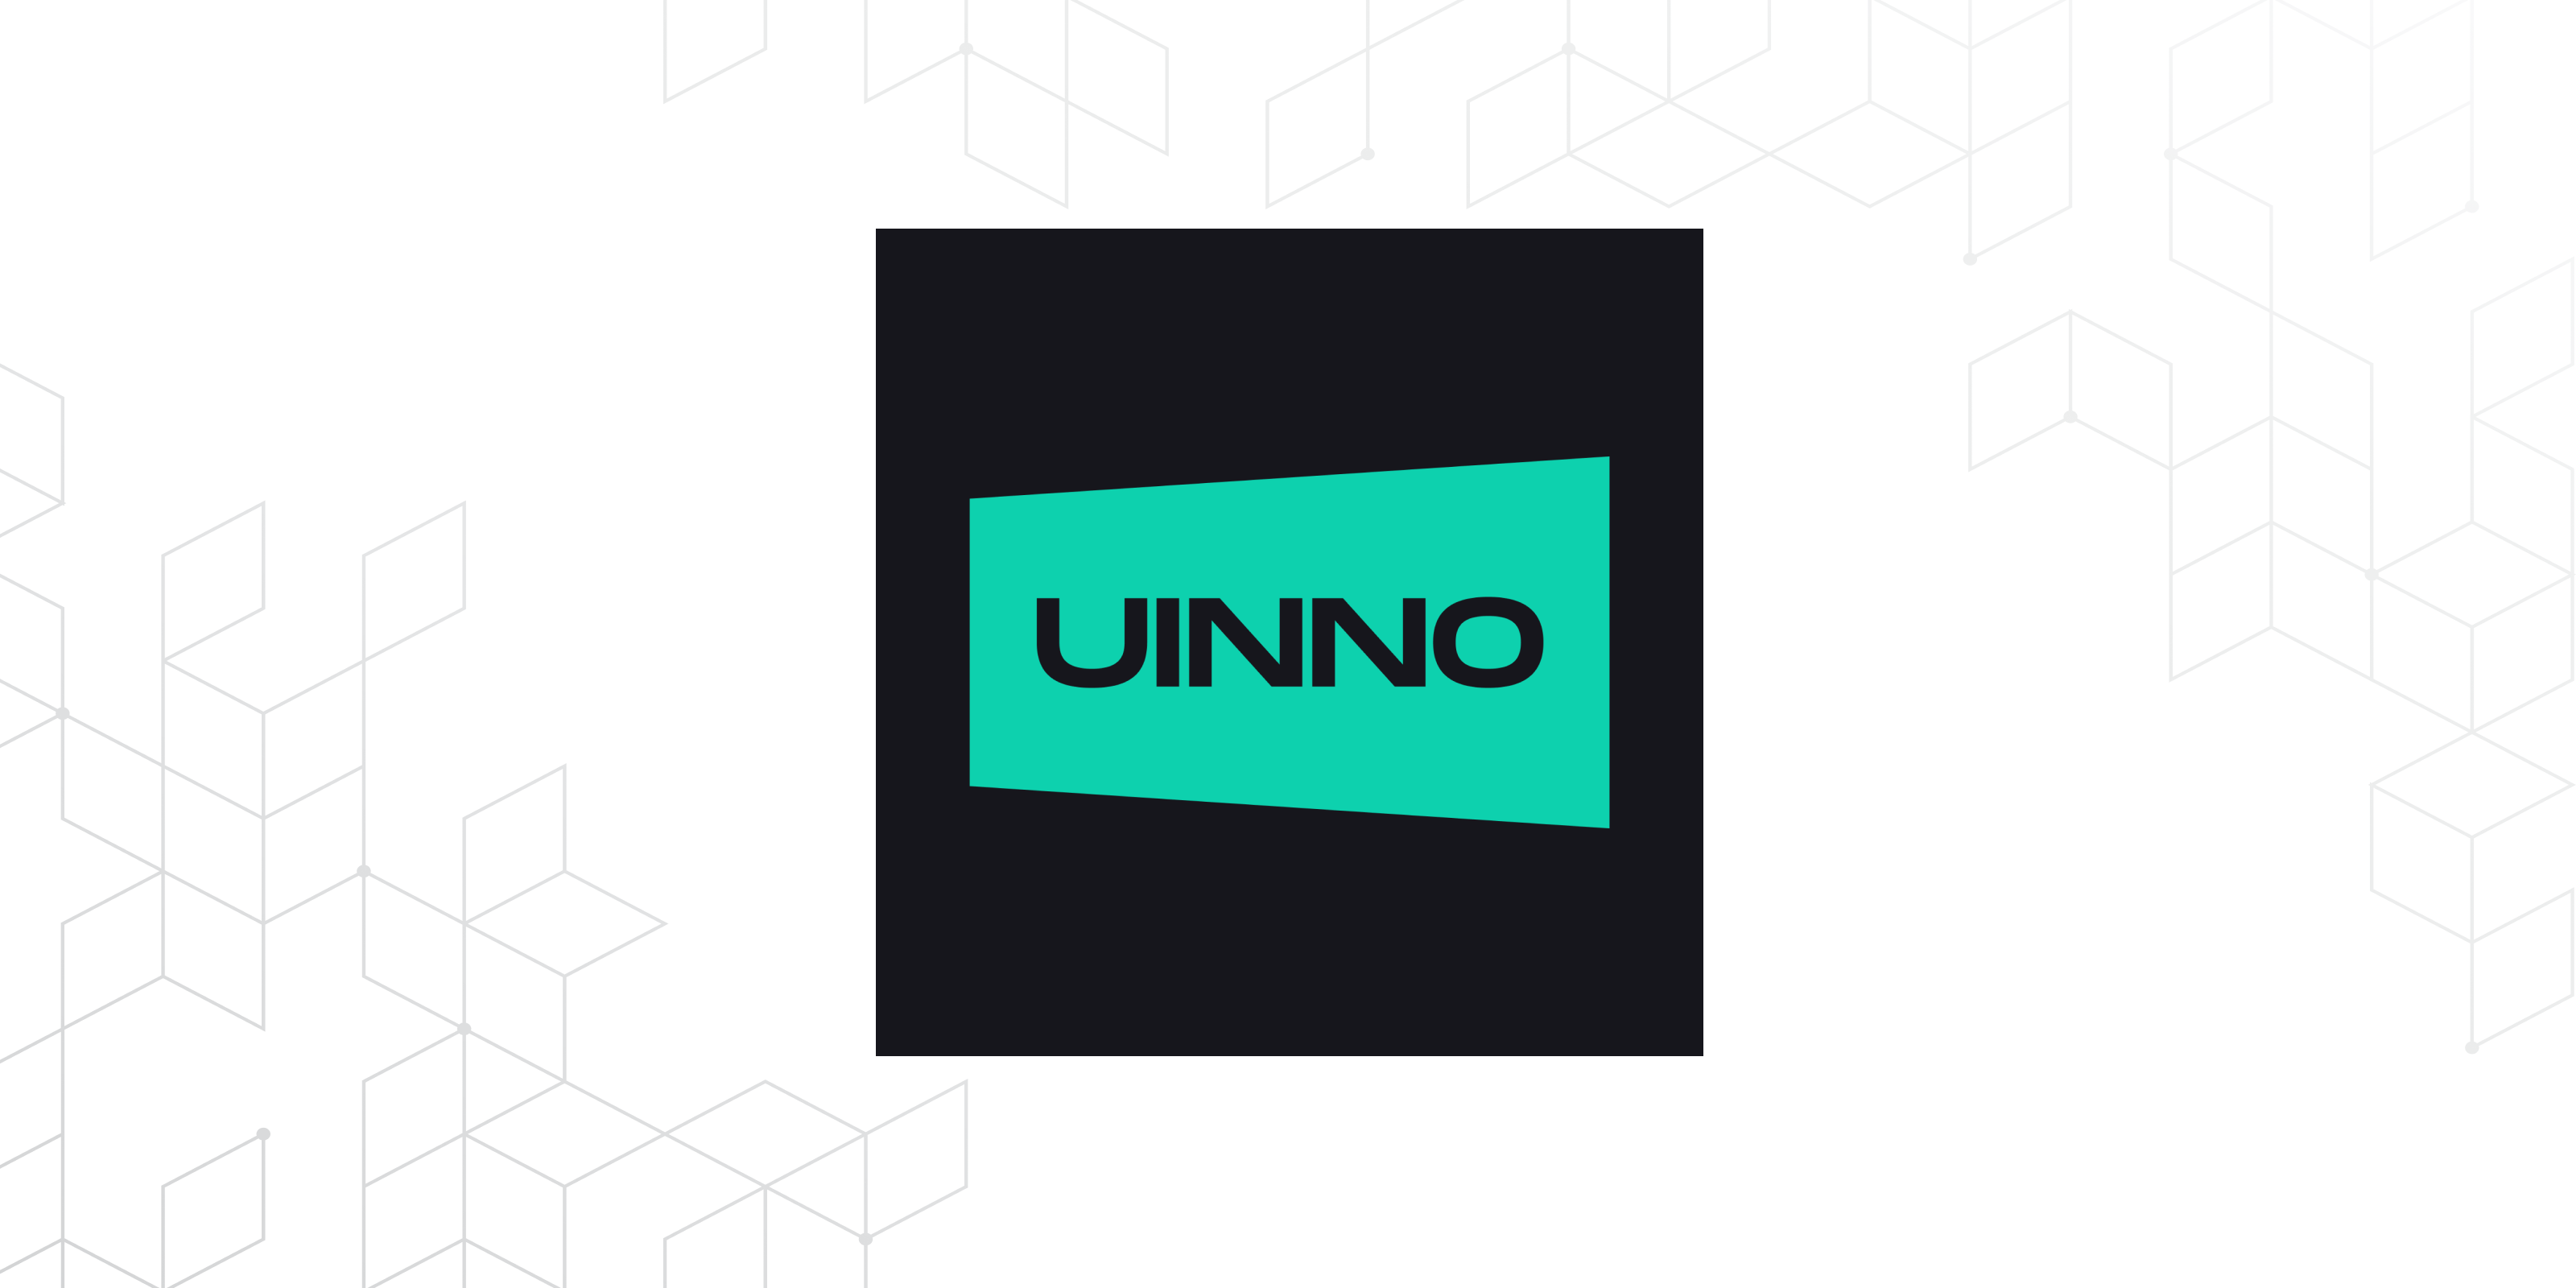 Uinno's logo